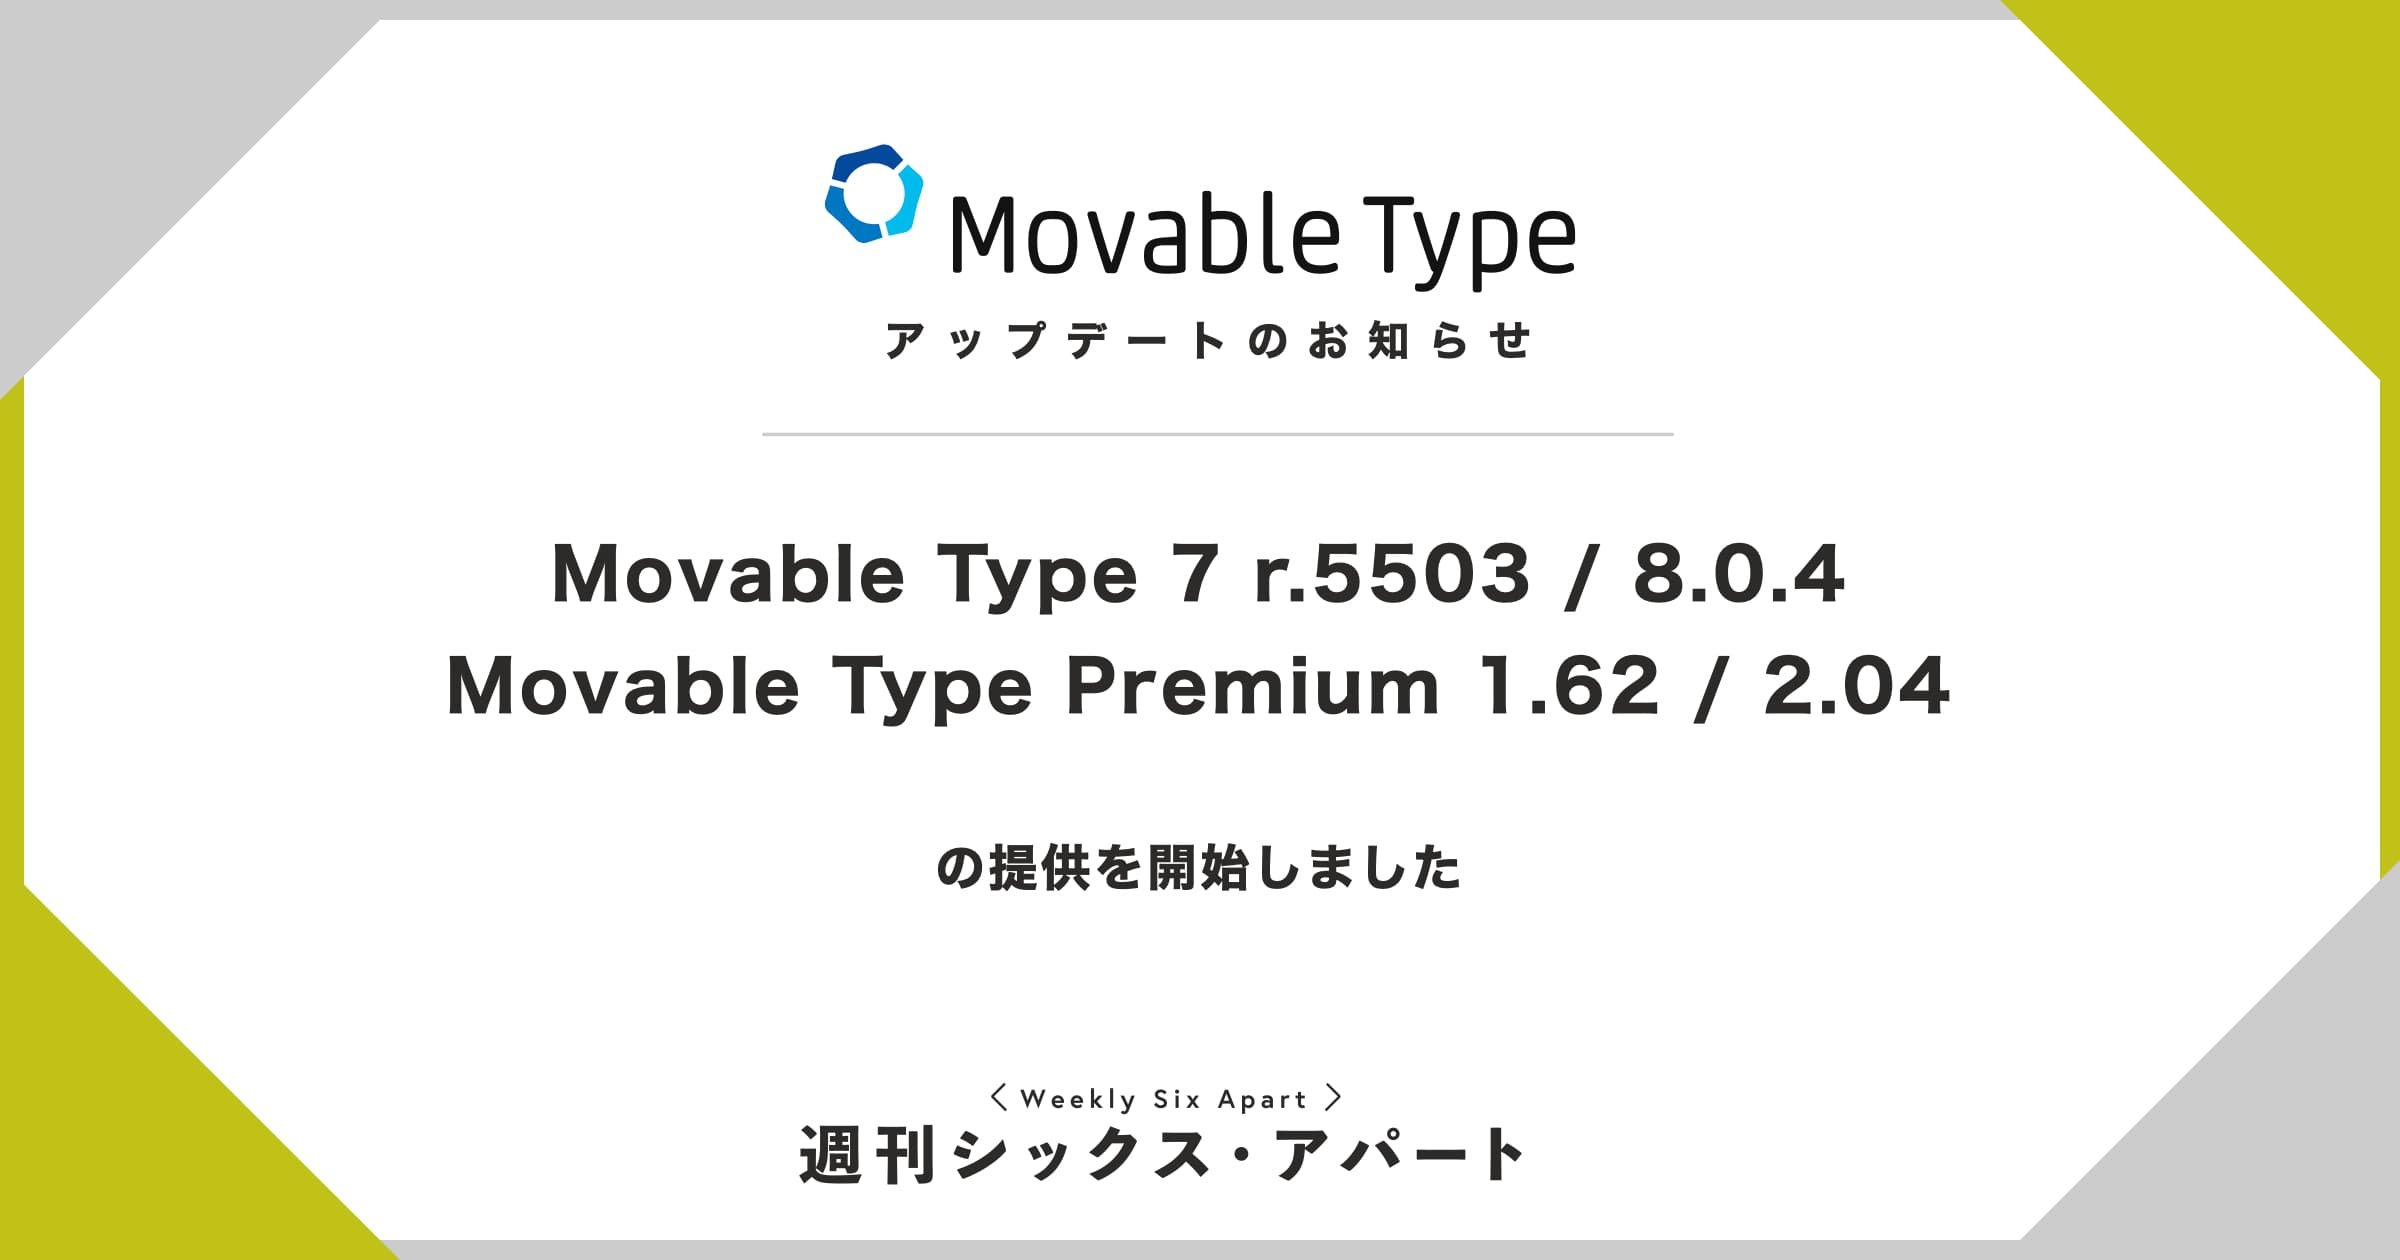 Movable Type 7 r.5503 / 8.0.4、Movable Type Premium 1.62 / 2.04 の提供を開始しました #週刊SA